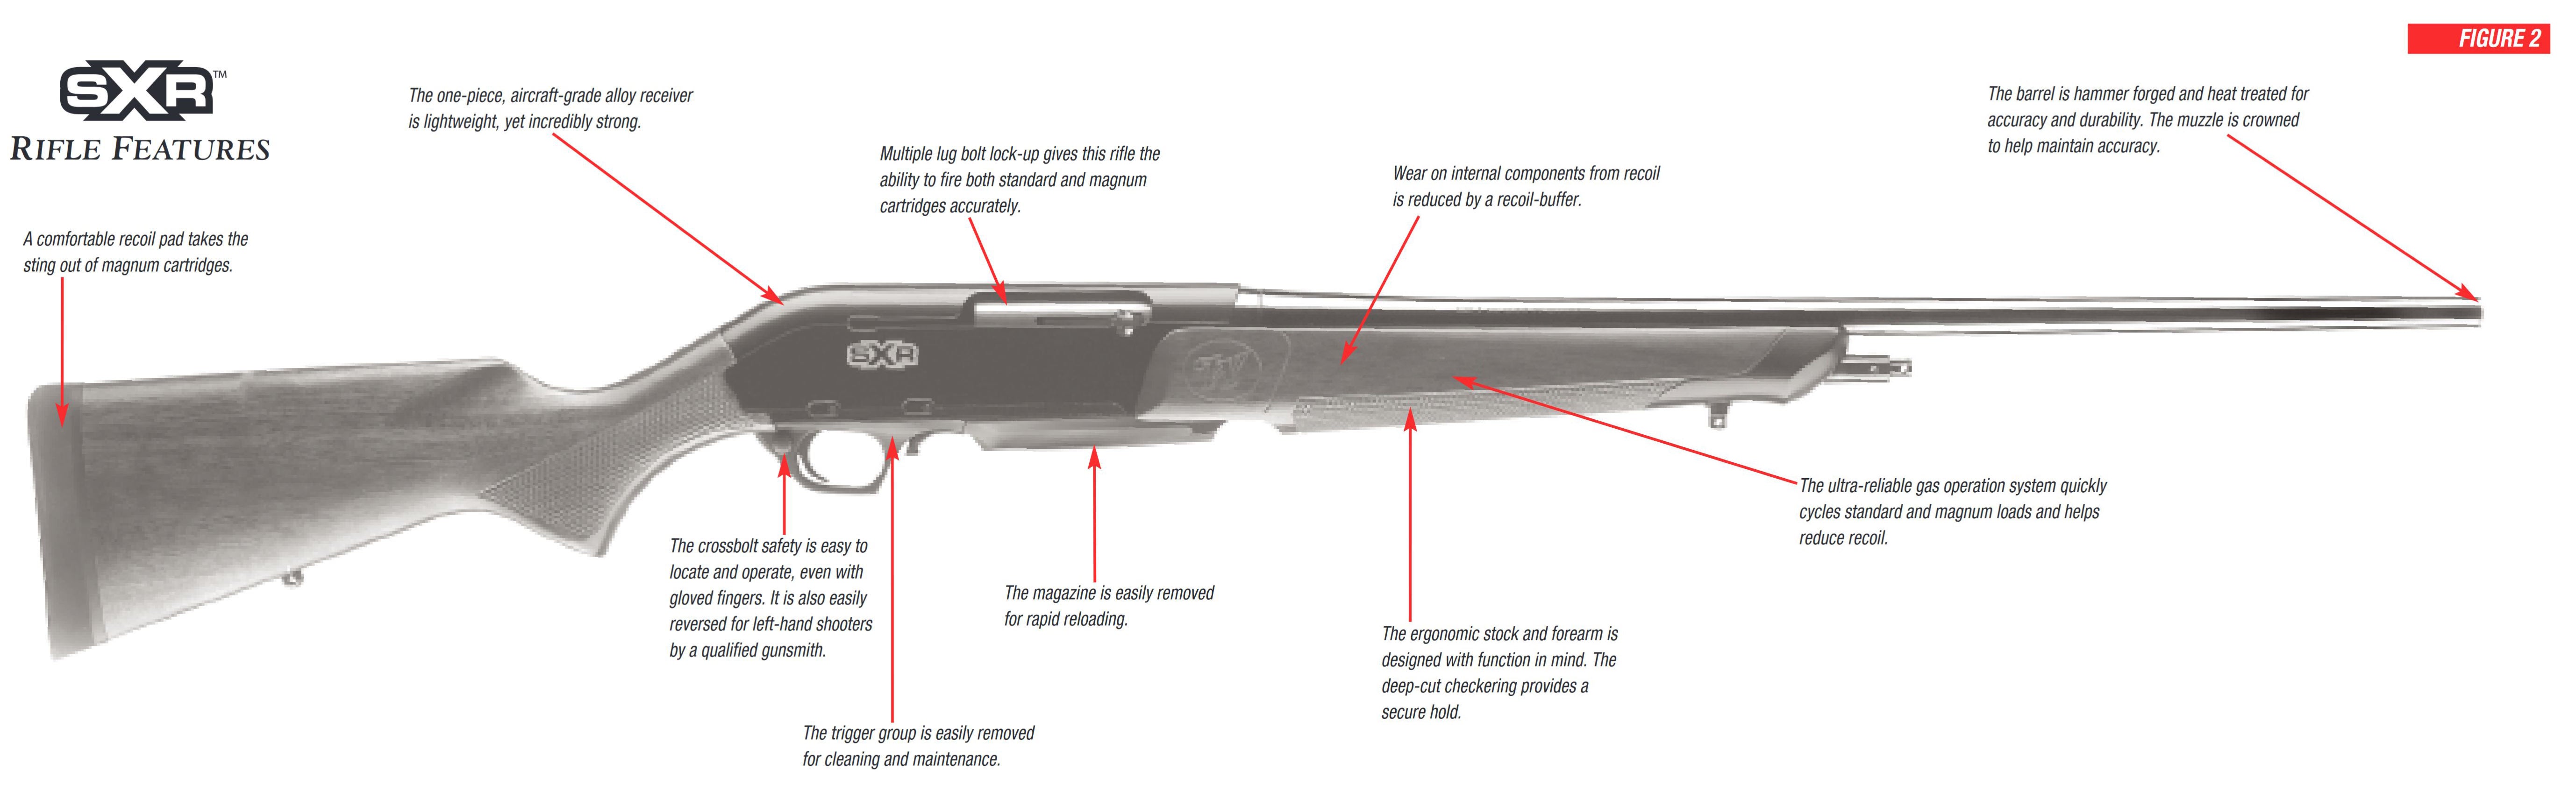 SXR Rifle Diagram Figure 2